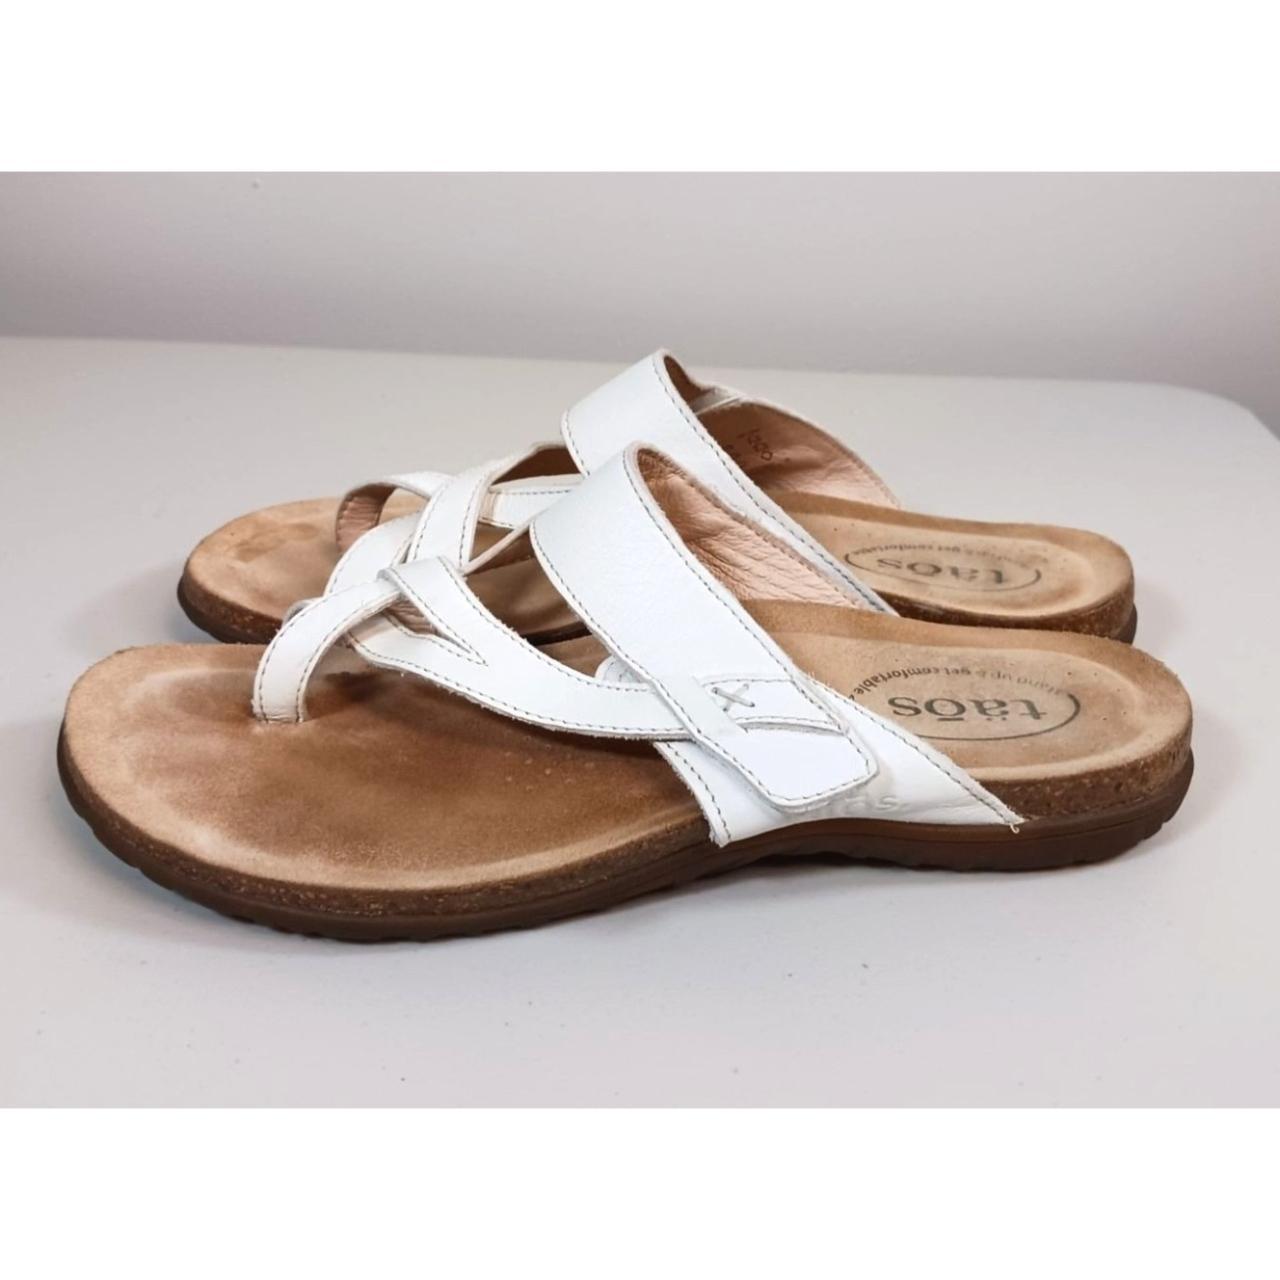 Taos Perfect Sandal Open Toe Leather Adjustable Size... - Depop